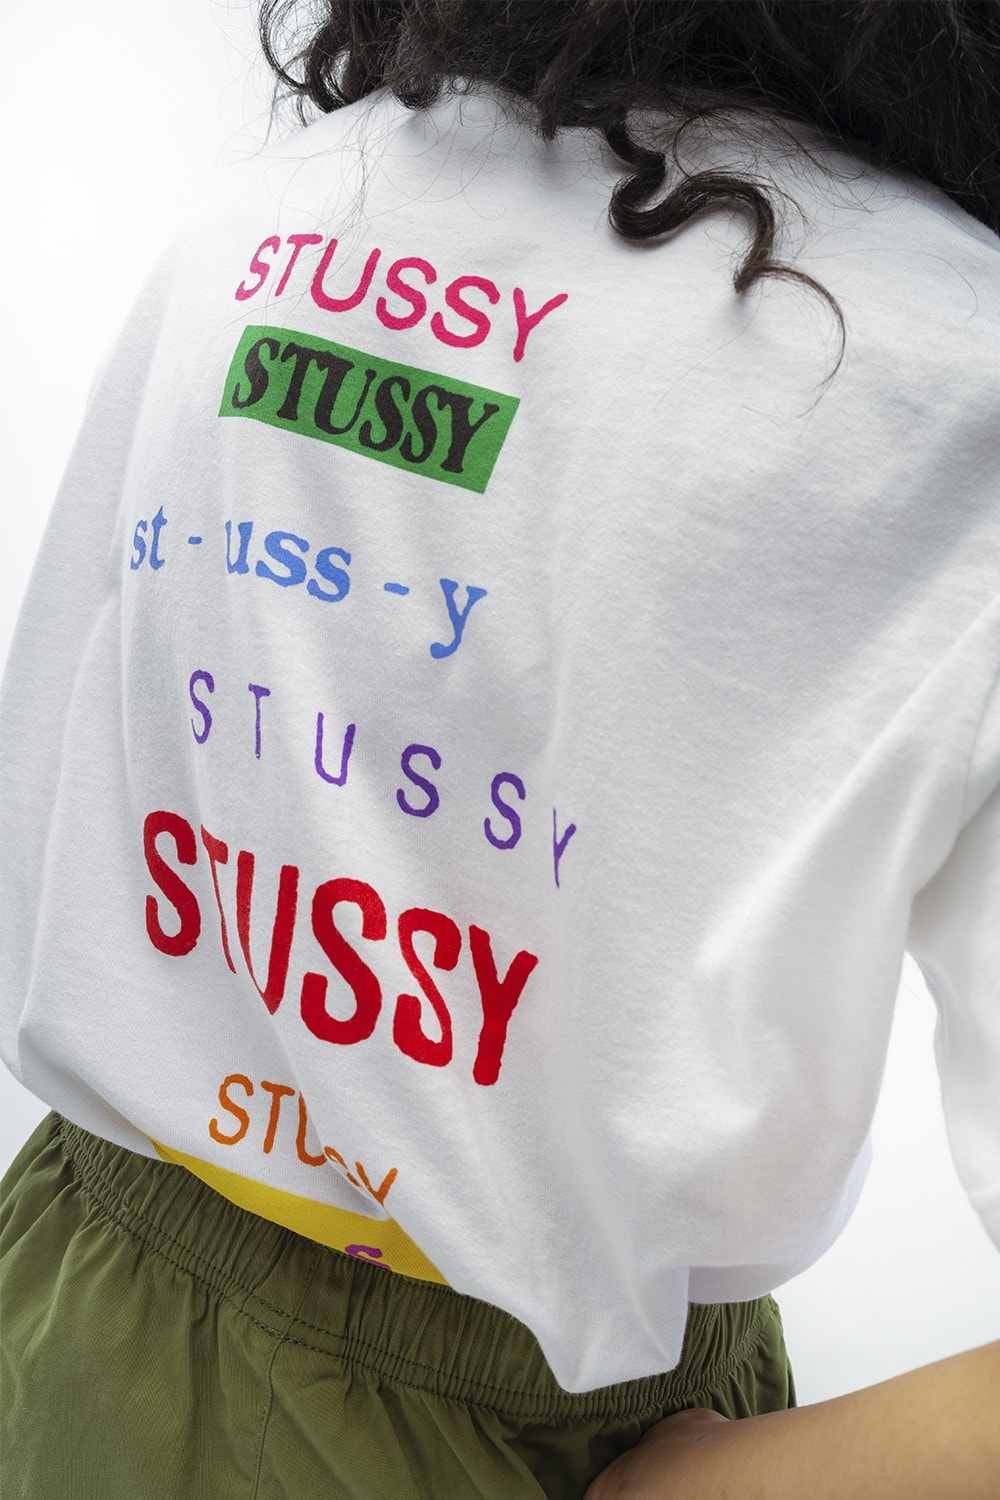 Stussy 香港專門店將迎來別注單品系列